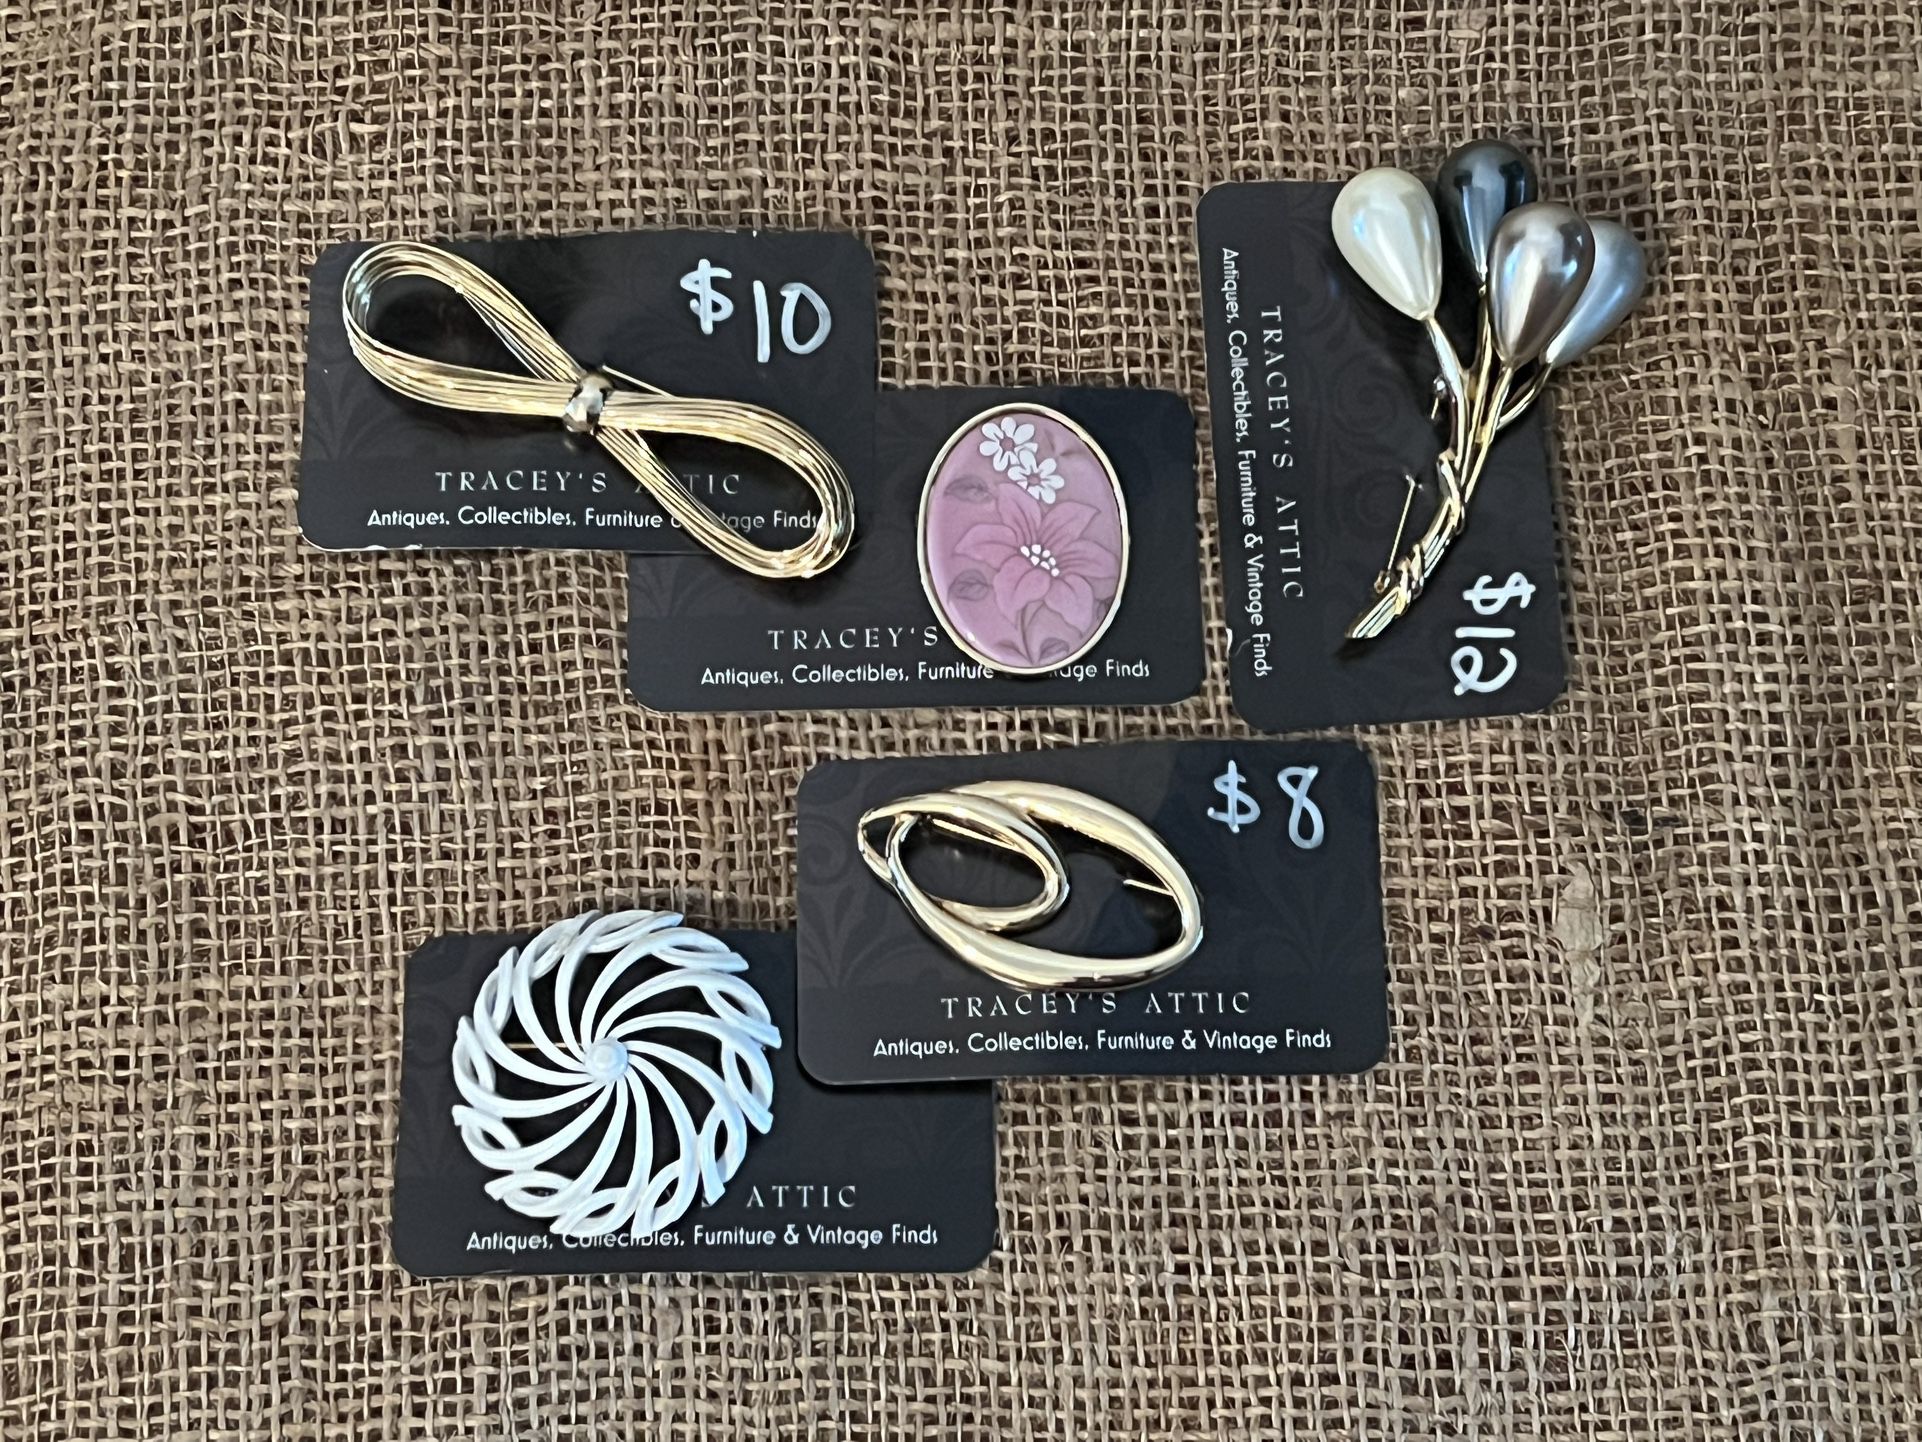 Fabulous Lot of 5 Vintage Brooch/Pins